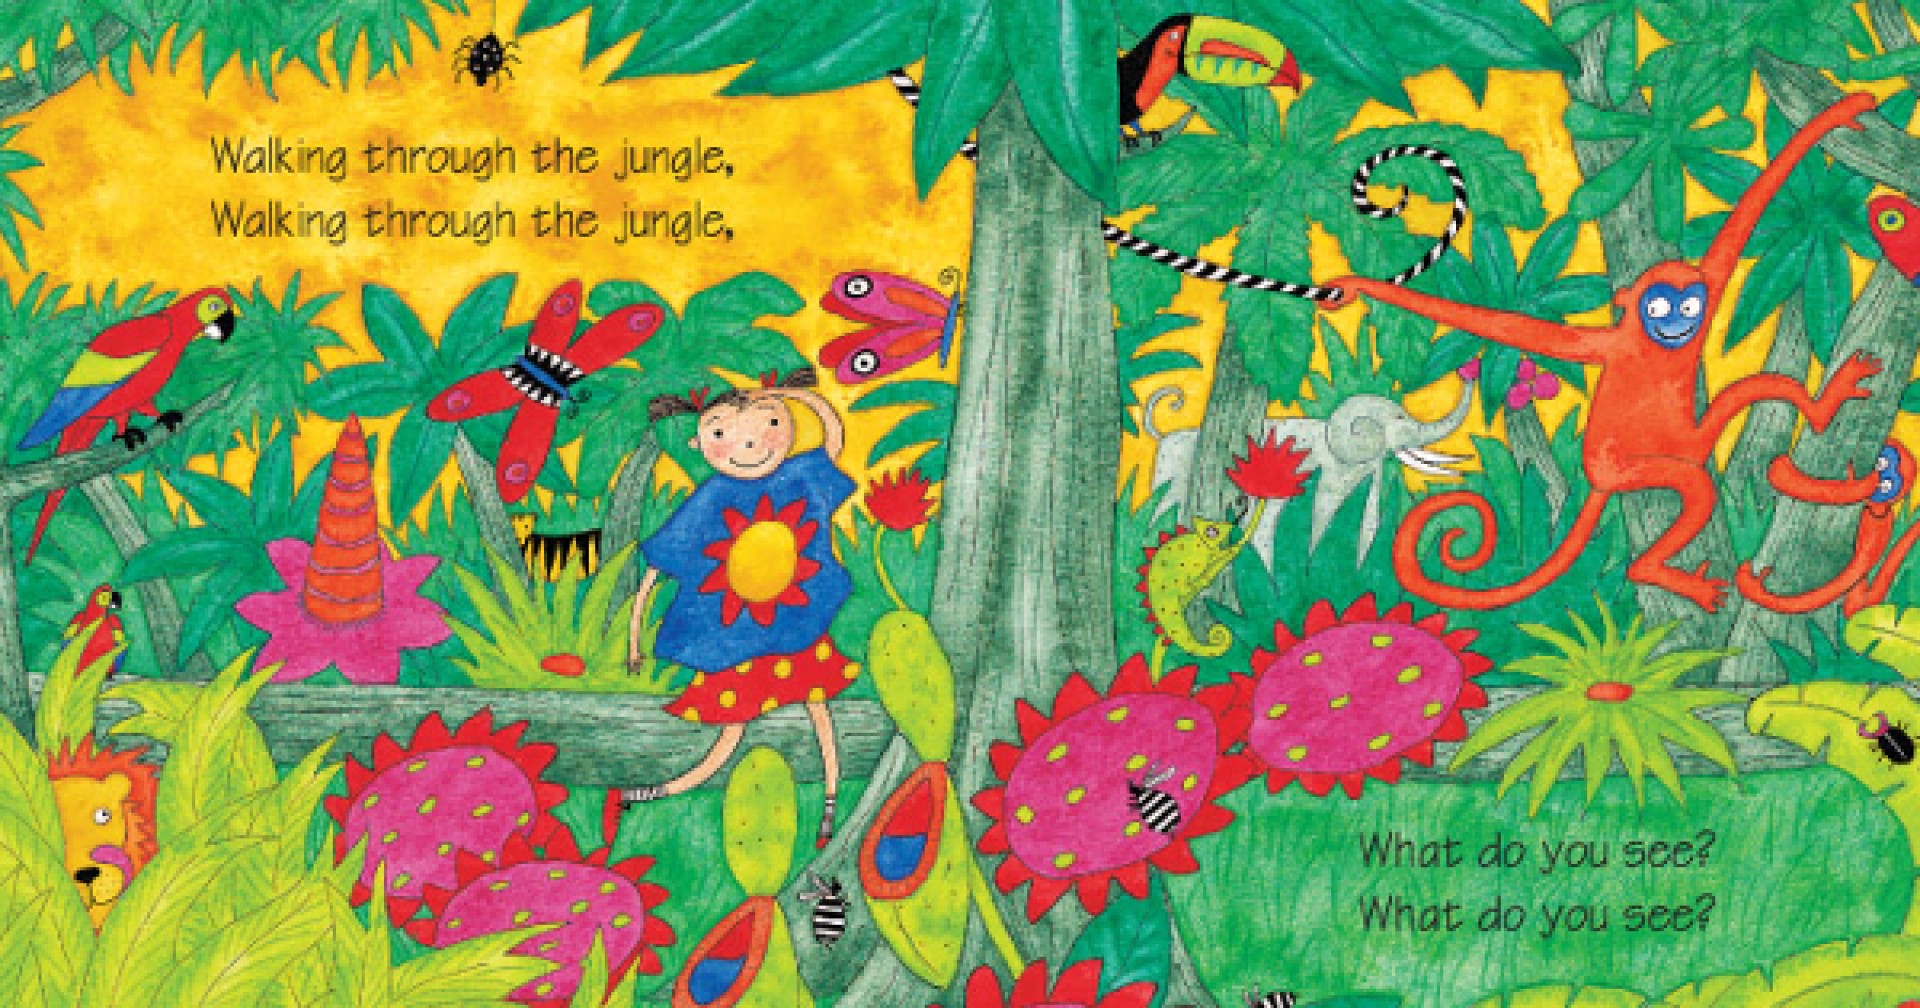 Ин джангл. Walking through the Jungle book. Рисуем джунгли с детьми 8 лет. Walk through the Jungle. Walking in the Jungle.